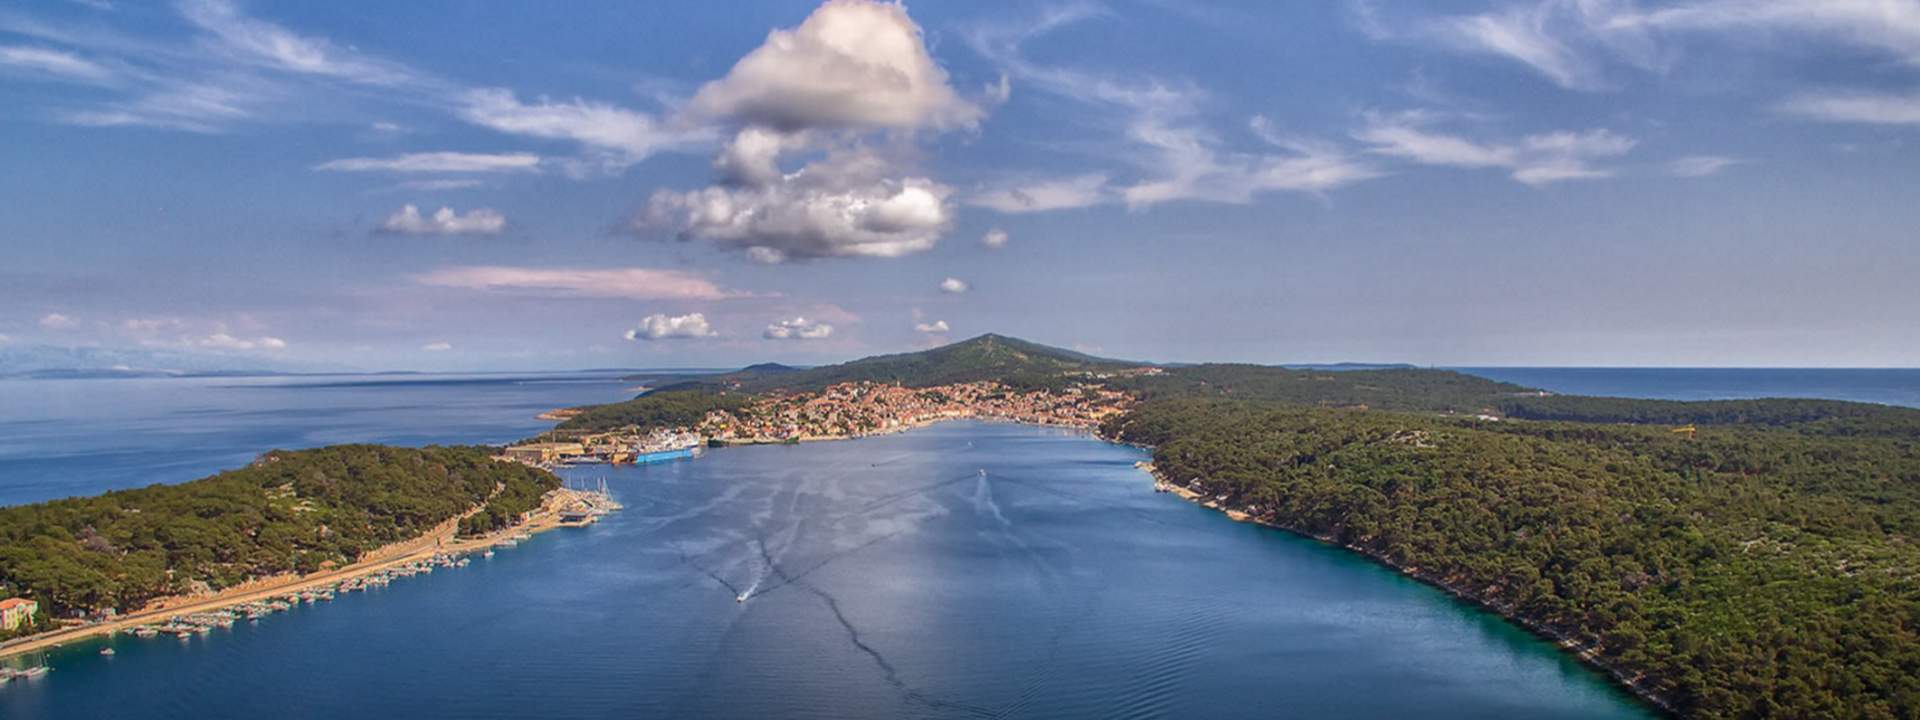 Sail to the most beautiful Croatian islands by catamaran